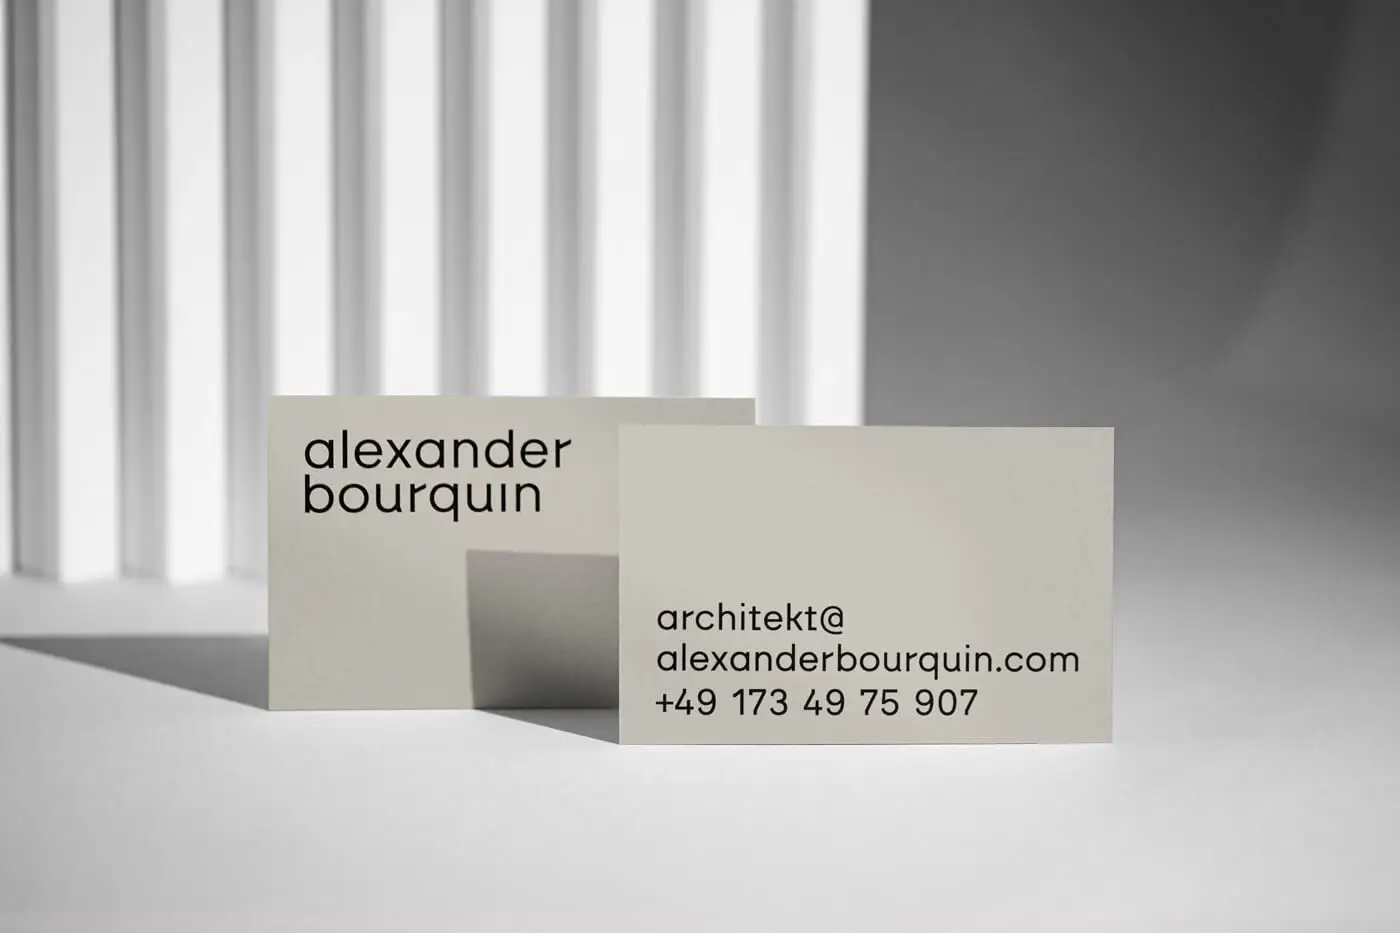 Mona-Wingerter-portfolio-grafiker-grafikdesigner-logo-brand-web-design-responsivedesign-businesscards-sign-kaiserslautern-architect-architekt-logodesign-alexander-bourquin_3